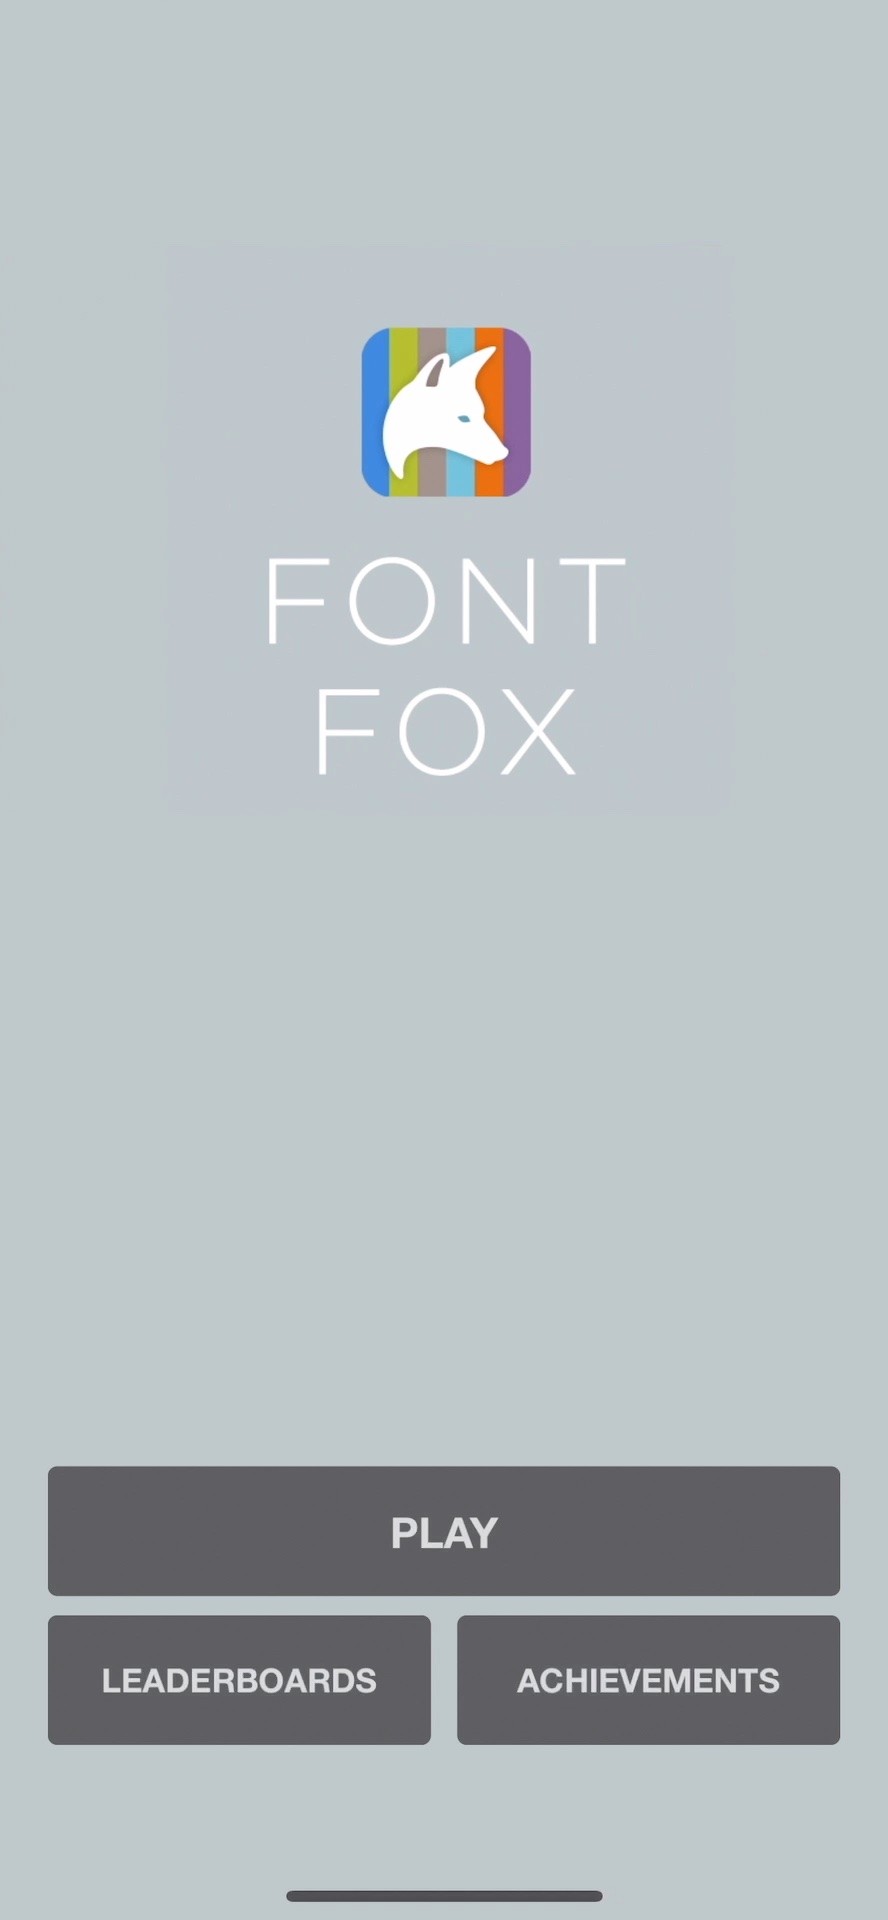 Modernistik Project: FontFox Game Demo